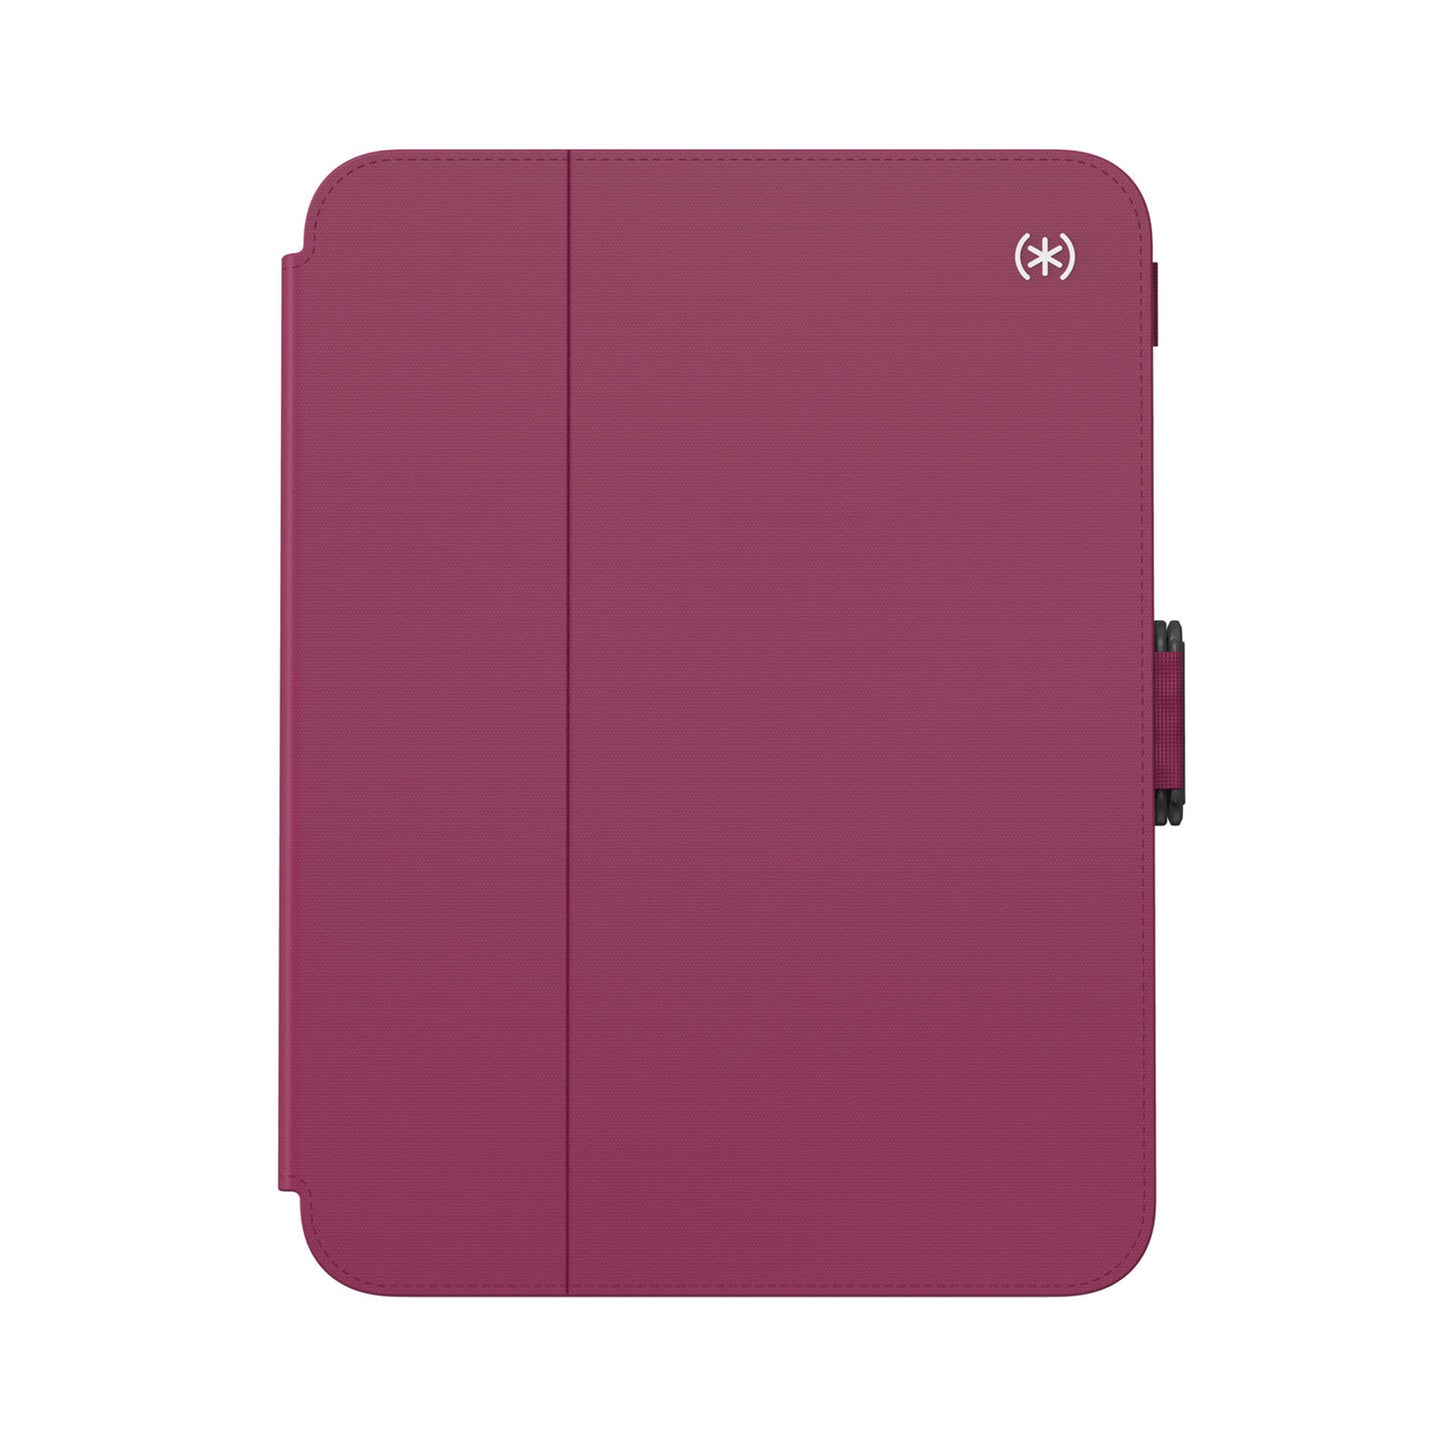 SPECK Balance Folio Case w/ Microban for iPad Mini 6th Gen (2021) - Very Berry Red / Slate Grey